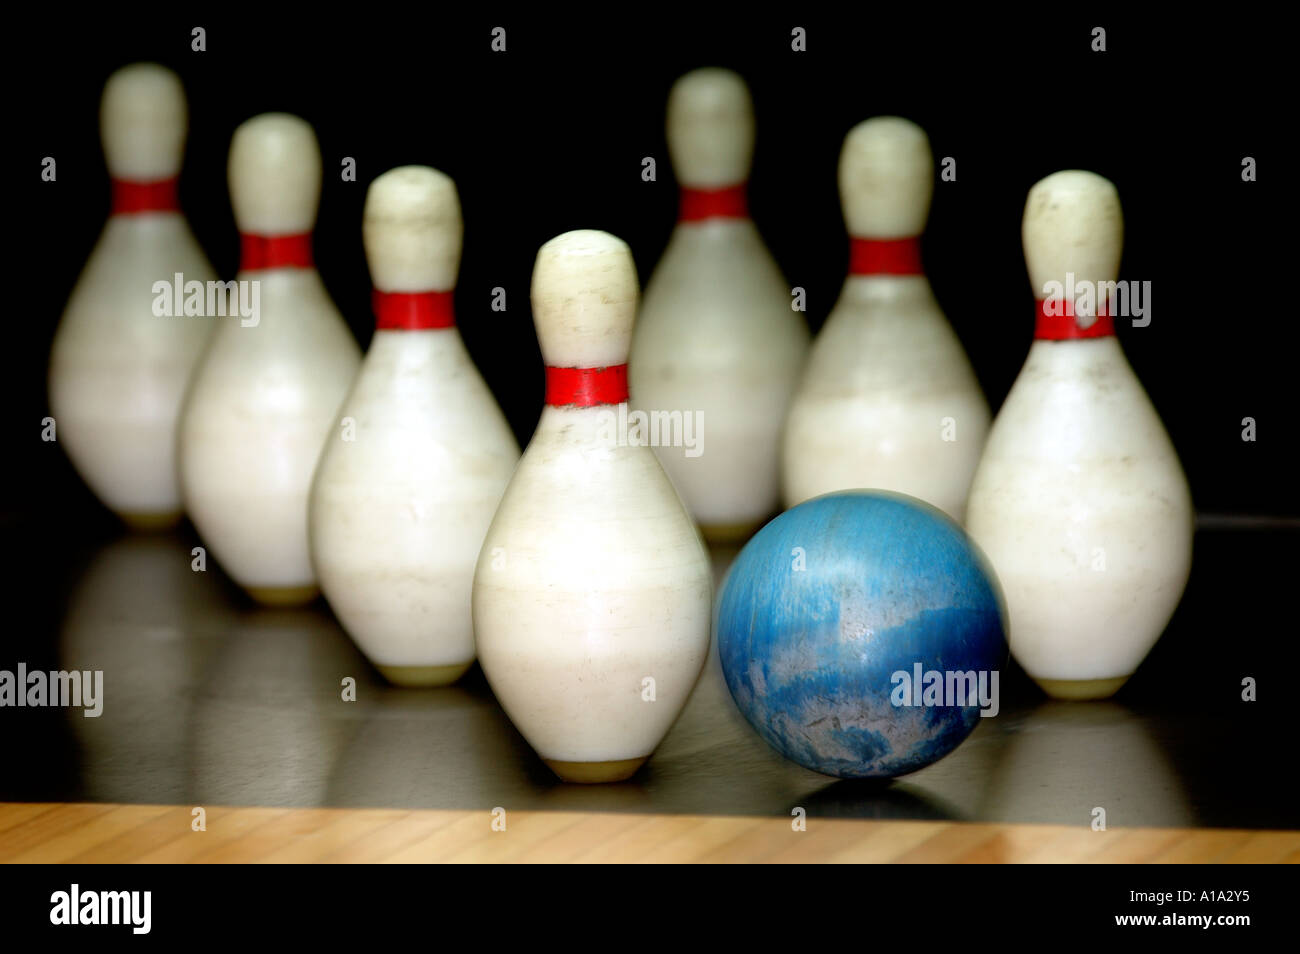 Bowl bowling pins duck pin white recreation sport tenpin skittles